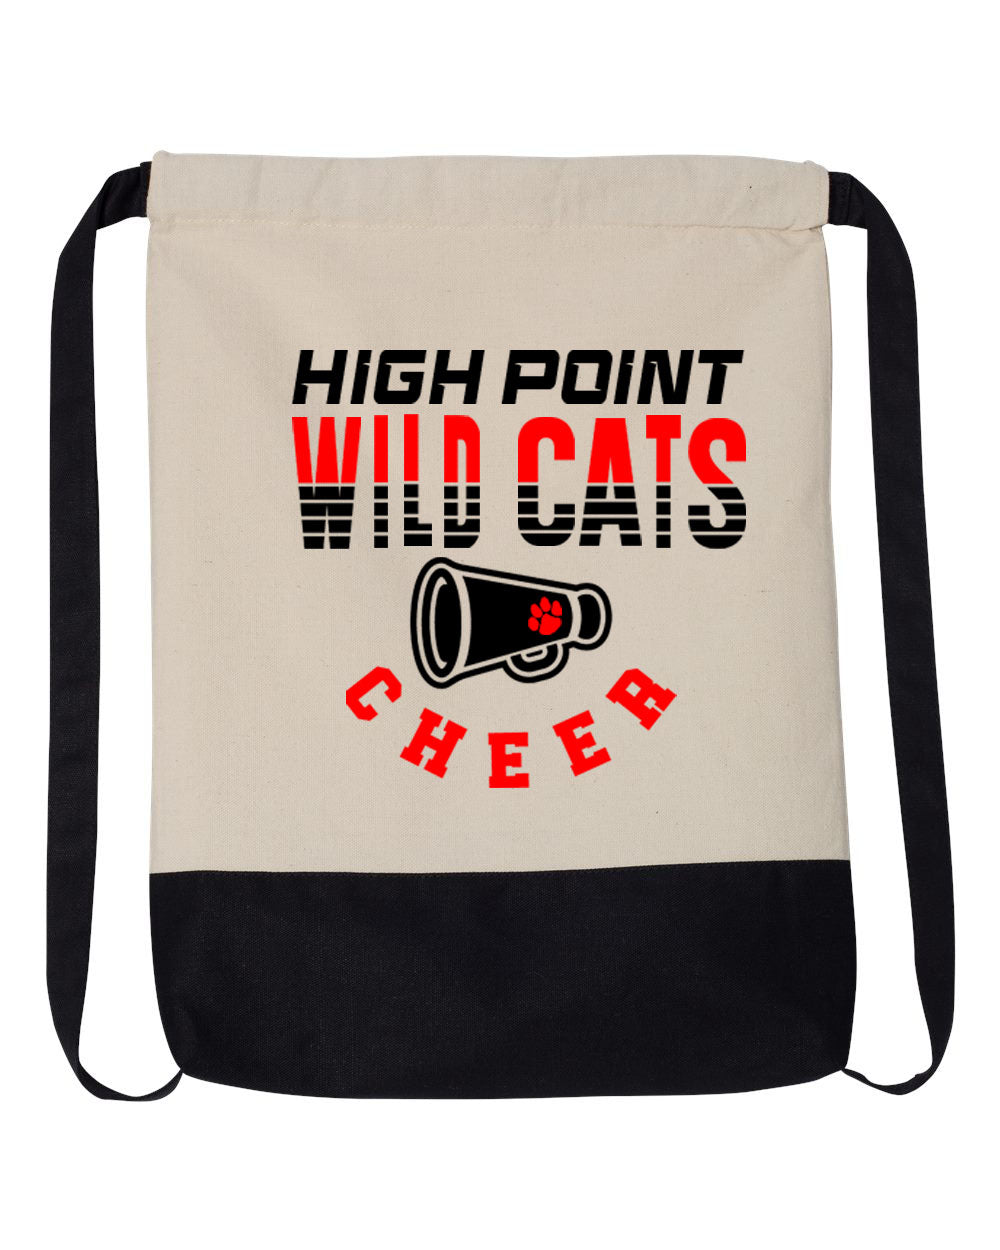 Wildcats Cheer design 2 Drawstring Bag